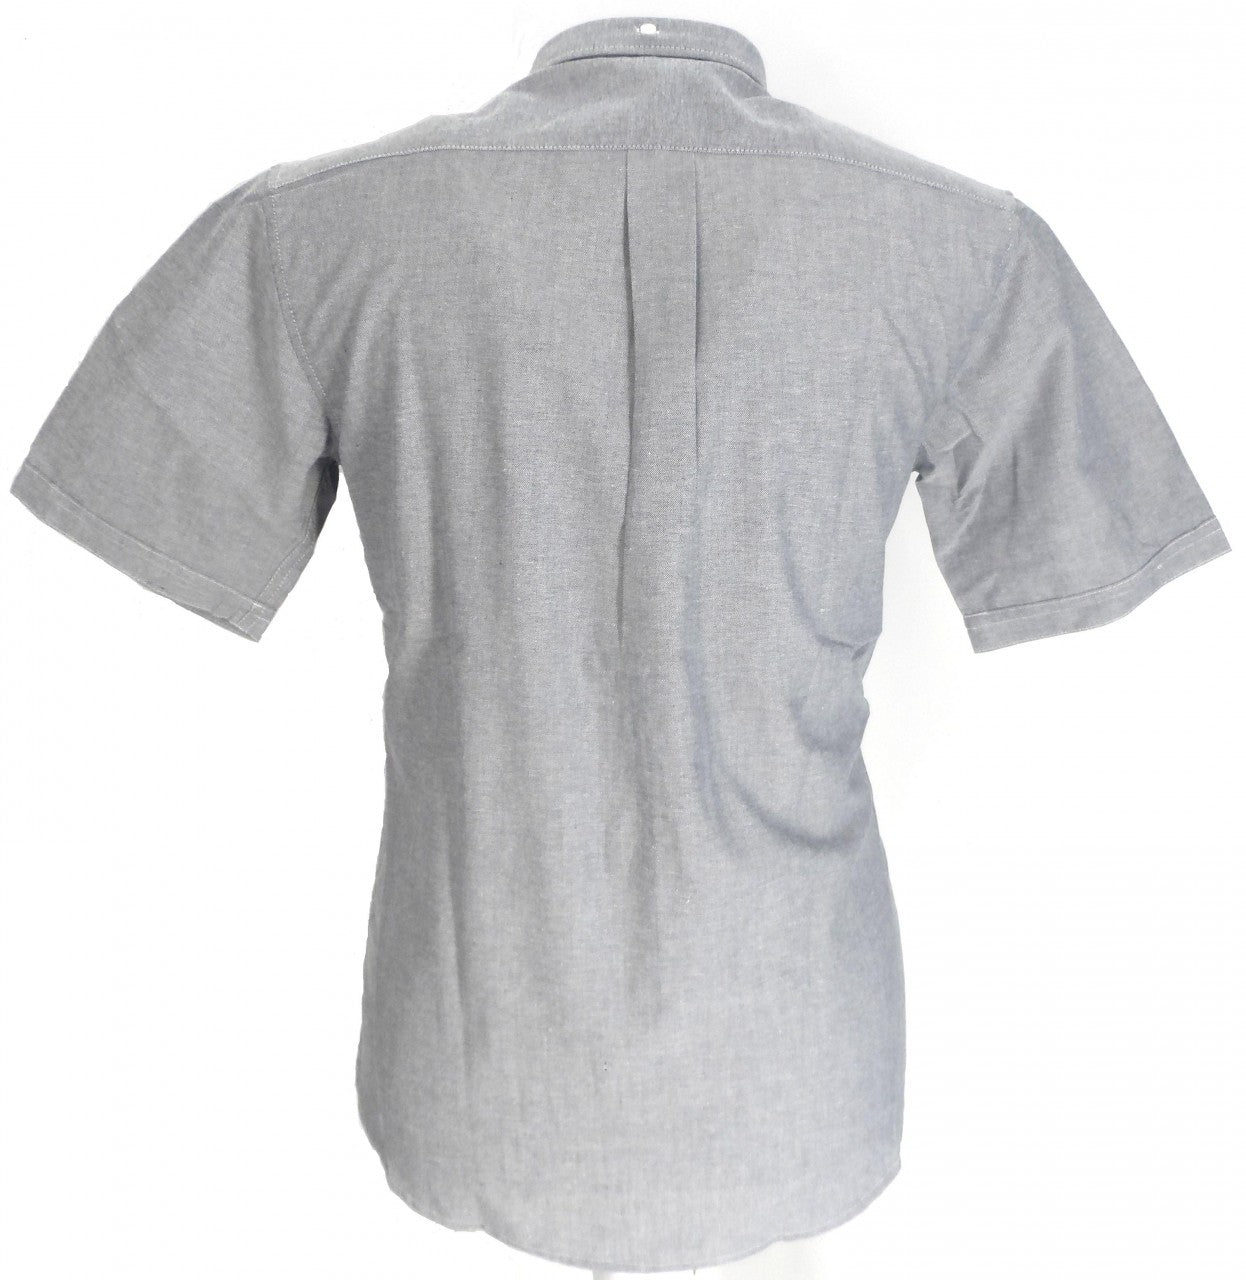 Camisas con botones mod retro de manga corta de algodón Oxford azul marino Farah